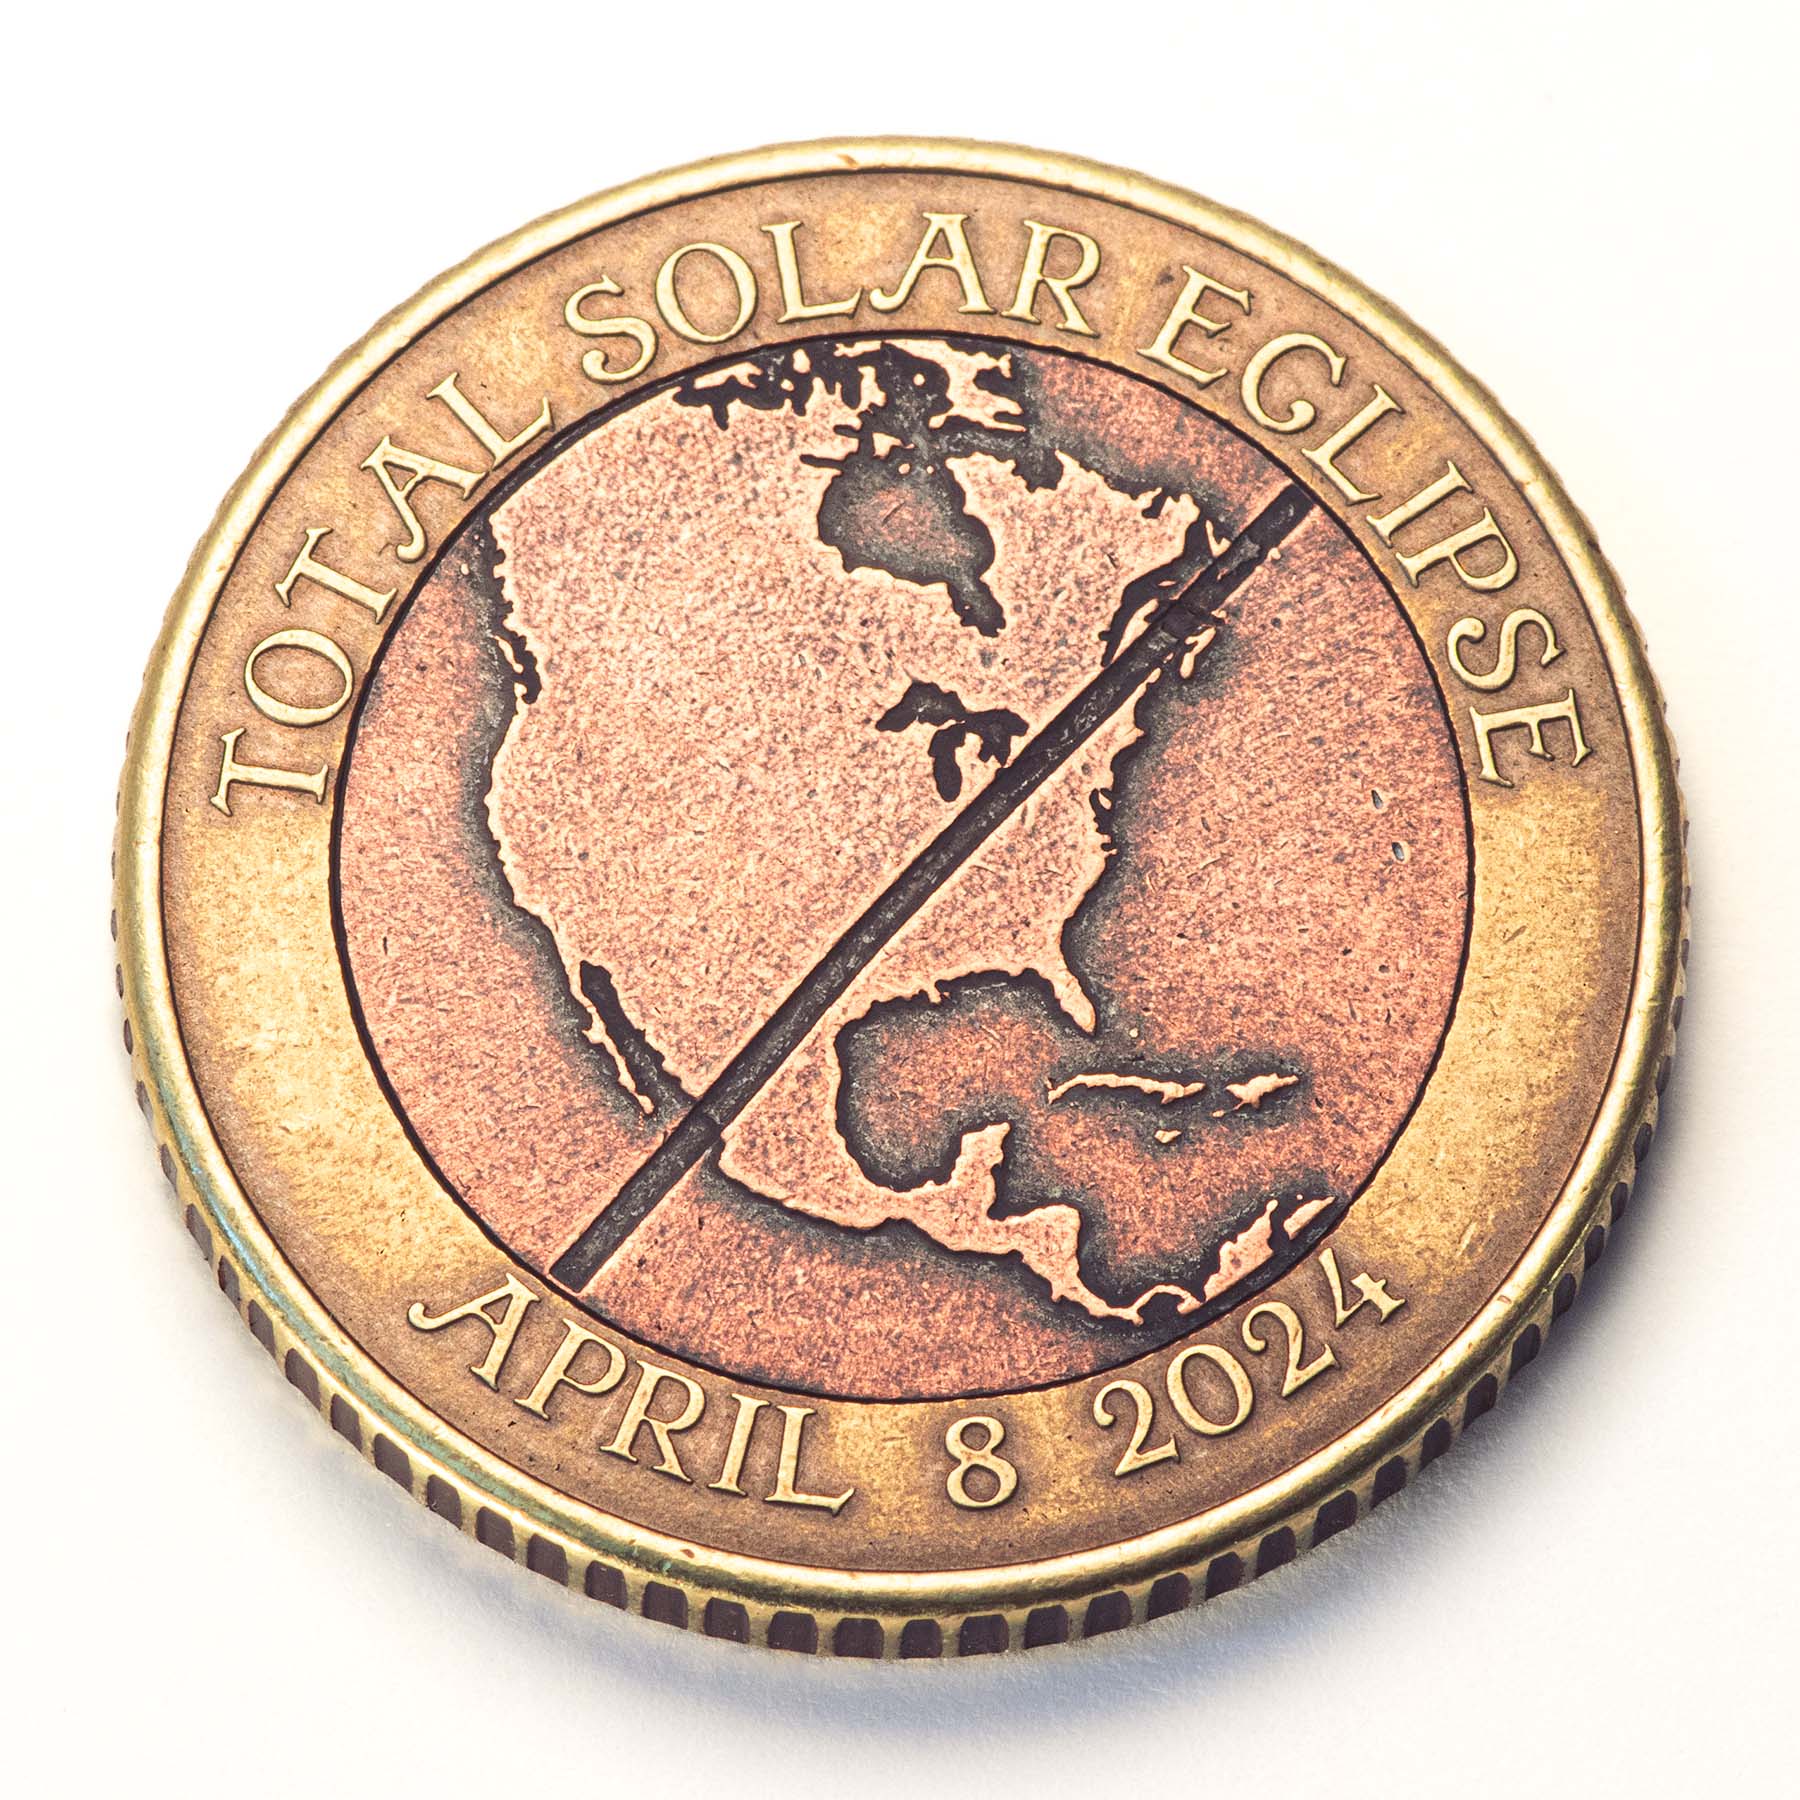 2024 Total Solar Eclipse Commemorative Coin - Copper and Brass